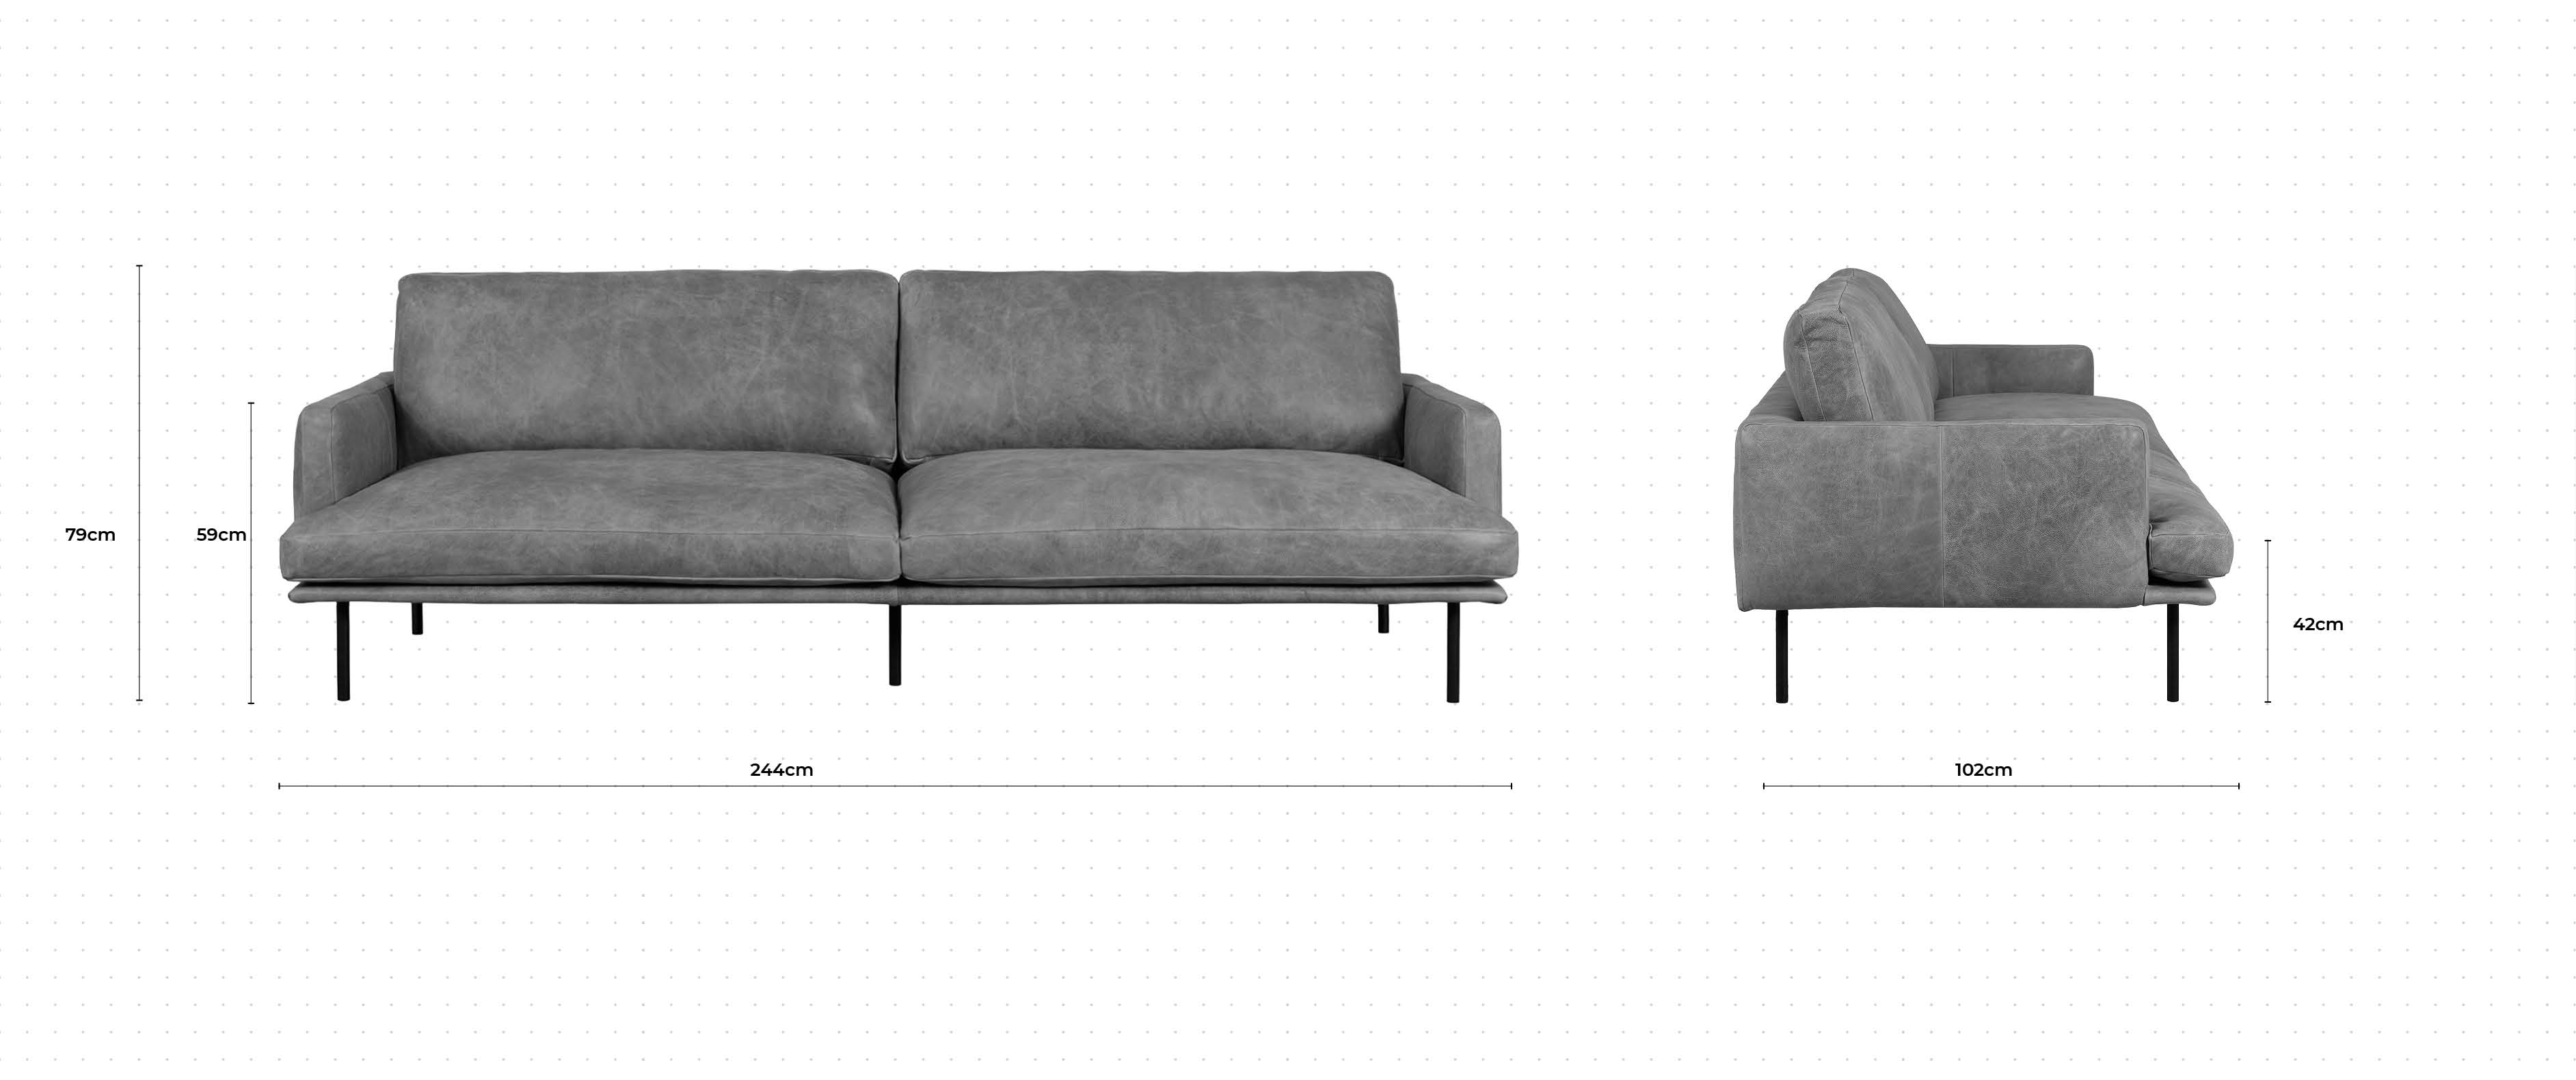 Crema 3 Seater Sofa dimensions